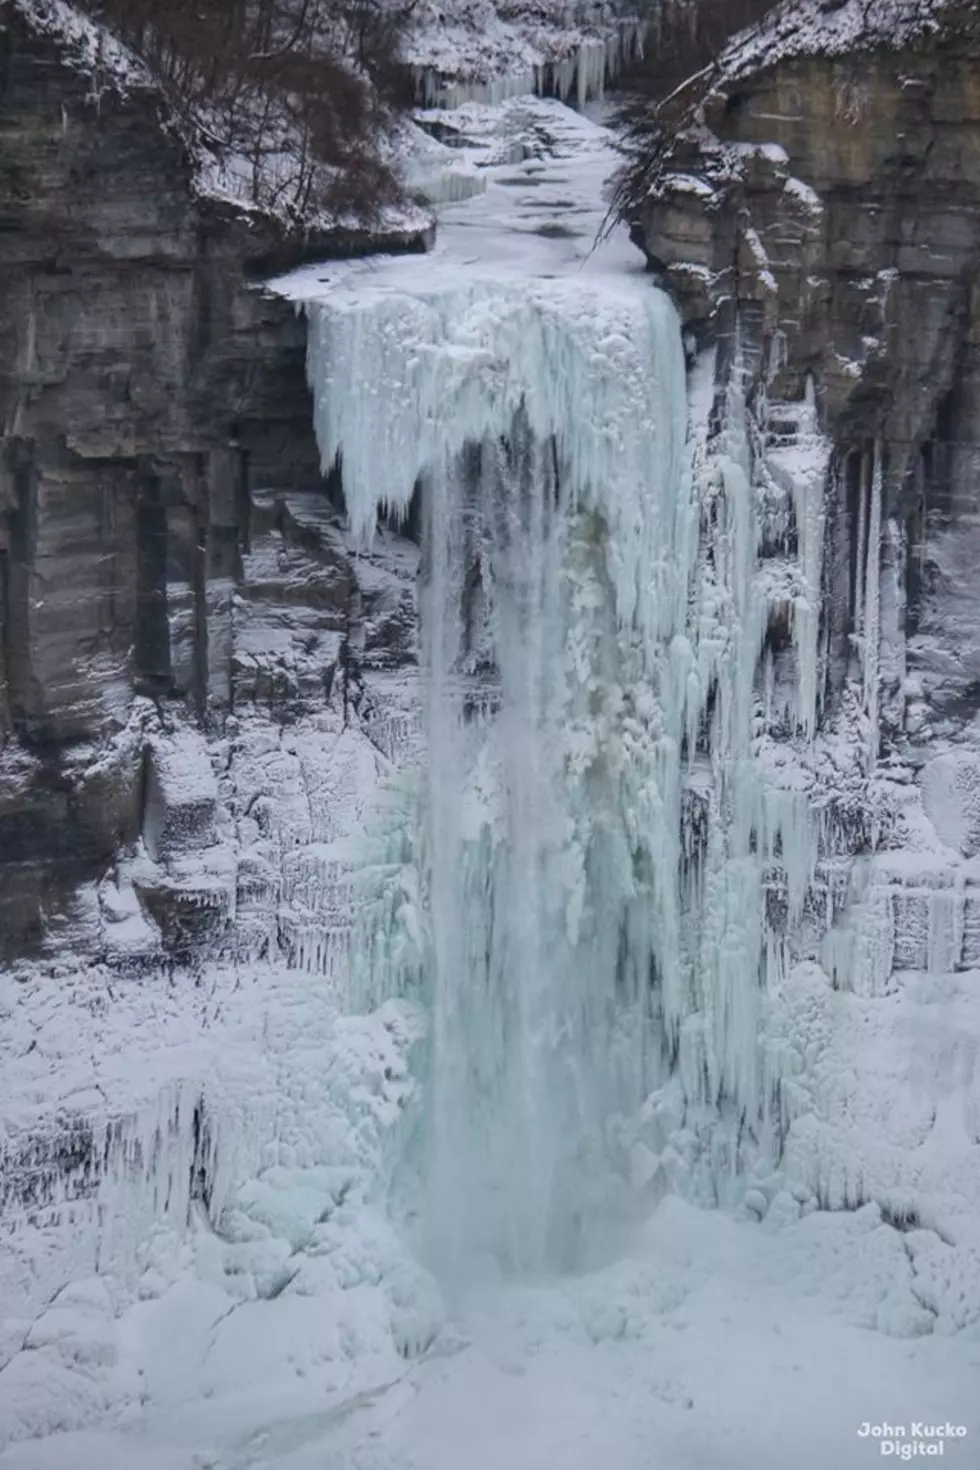 New York Falls Frozen Over